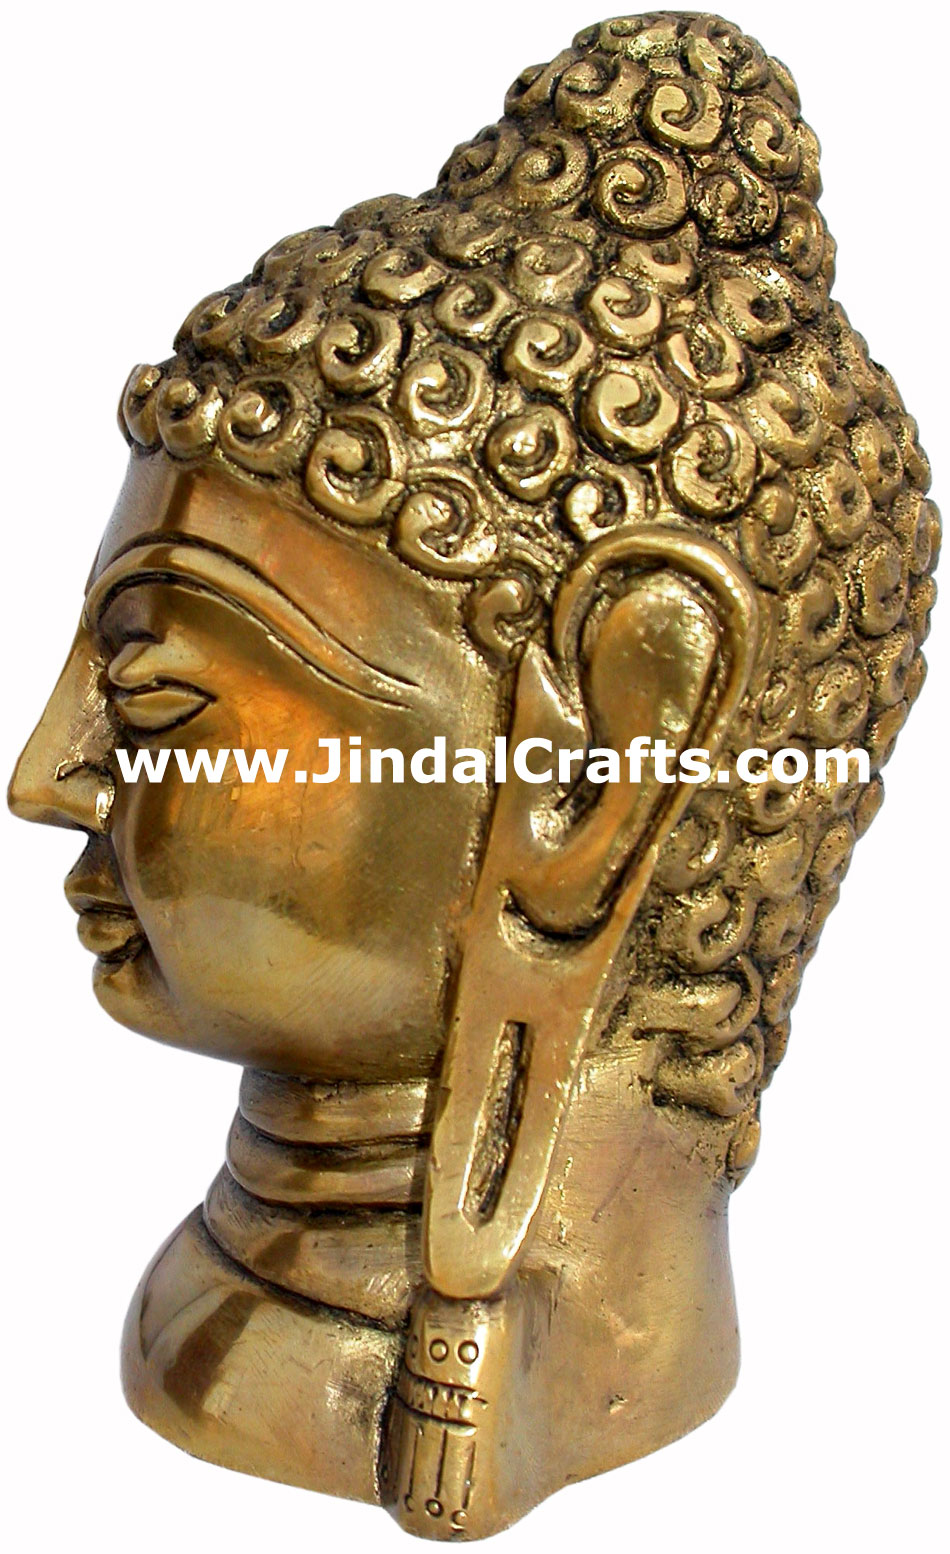 Buddha Bust - Hand Carved Indian Art Craft Handicraft Home Decor Brass Figurine